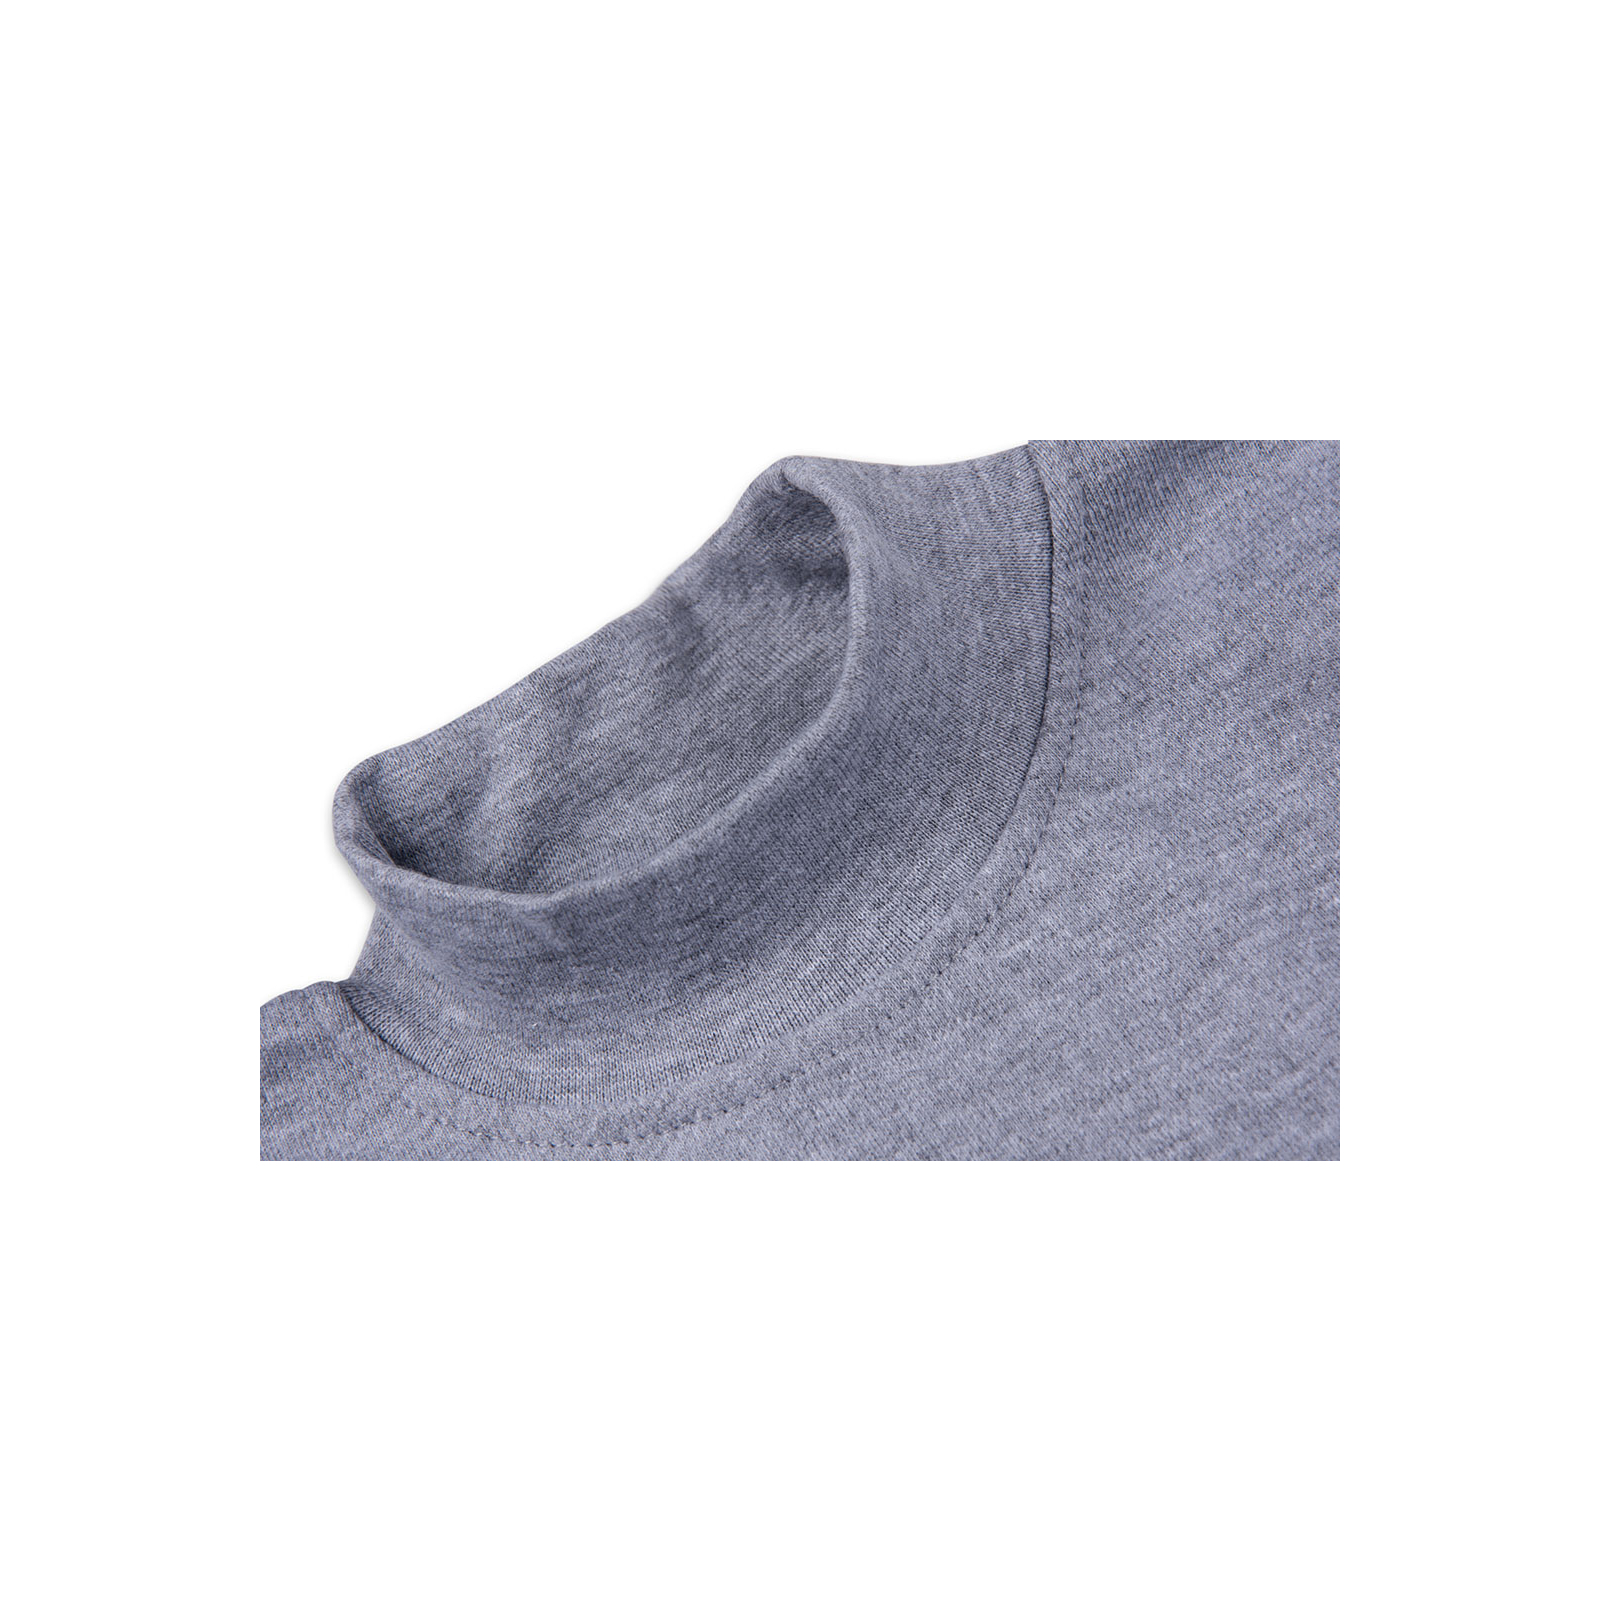 Кофта Lovetti водолазка серая меланжевая (1011-86-gray) изображение 3